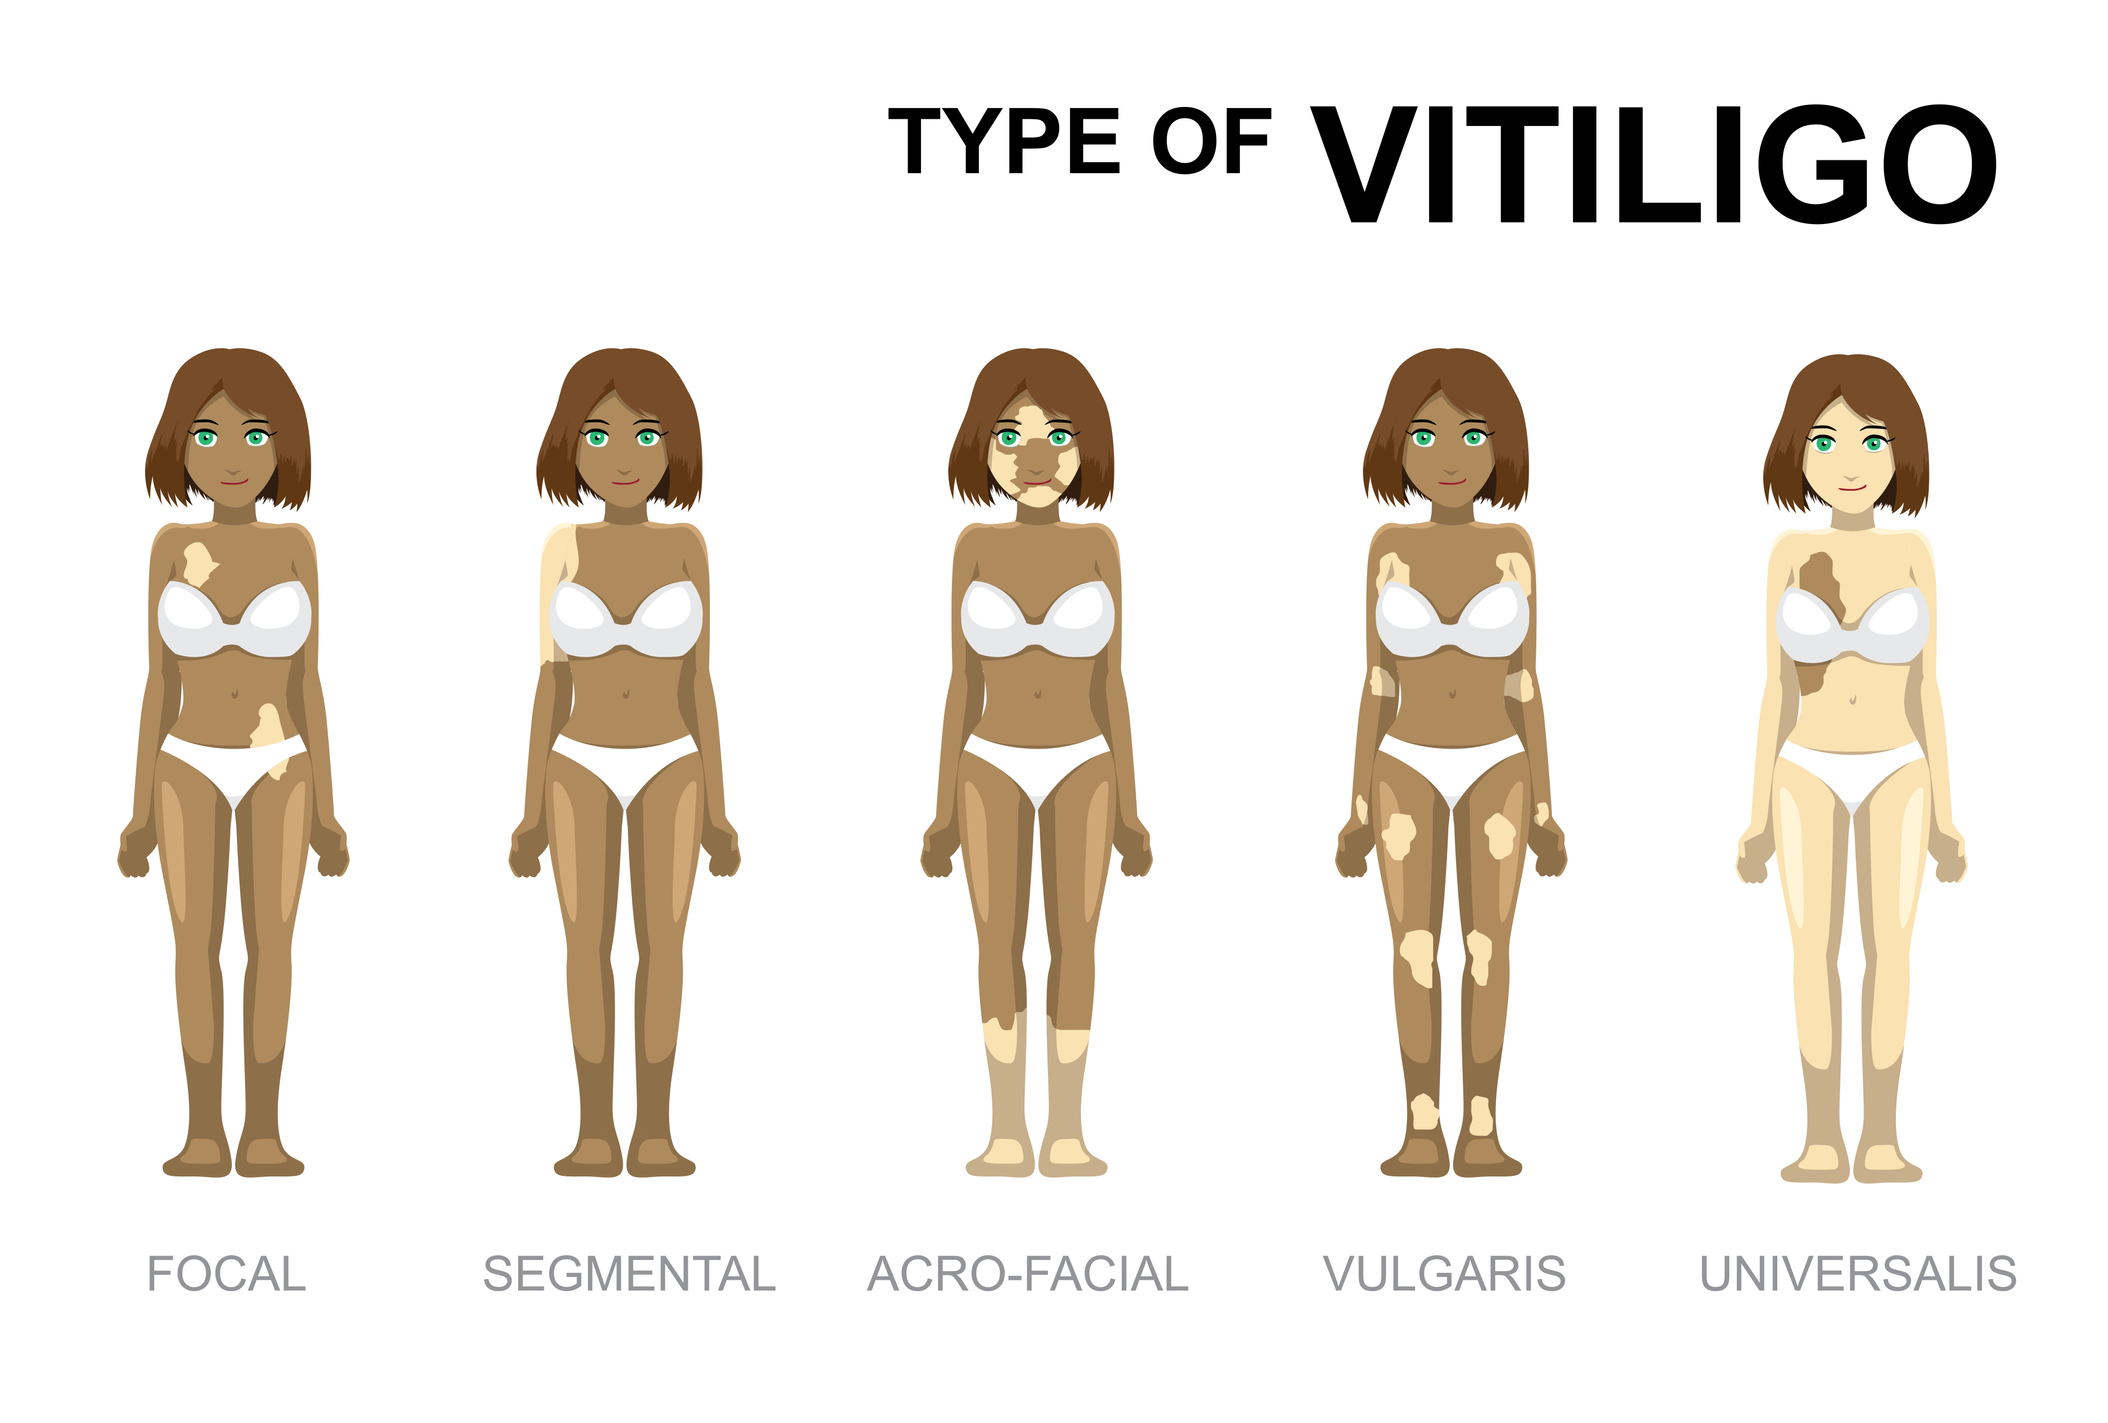 Types of vitiligo